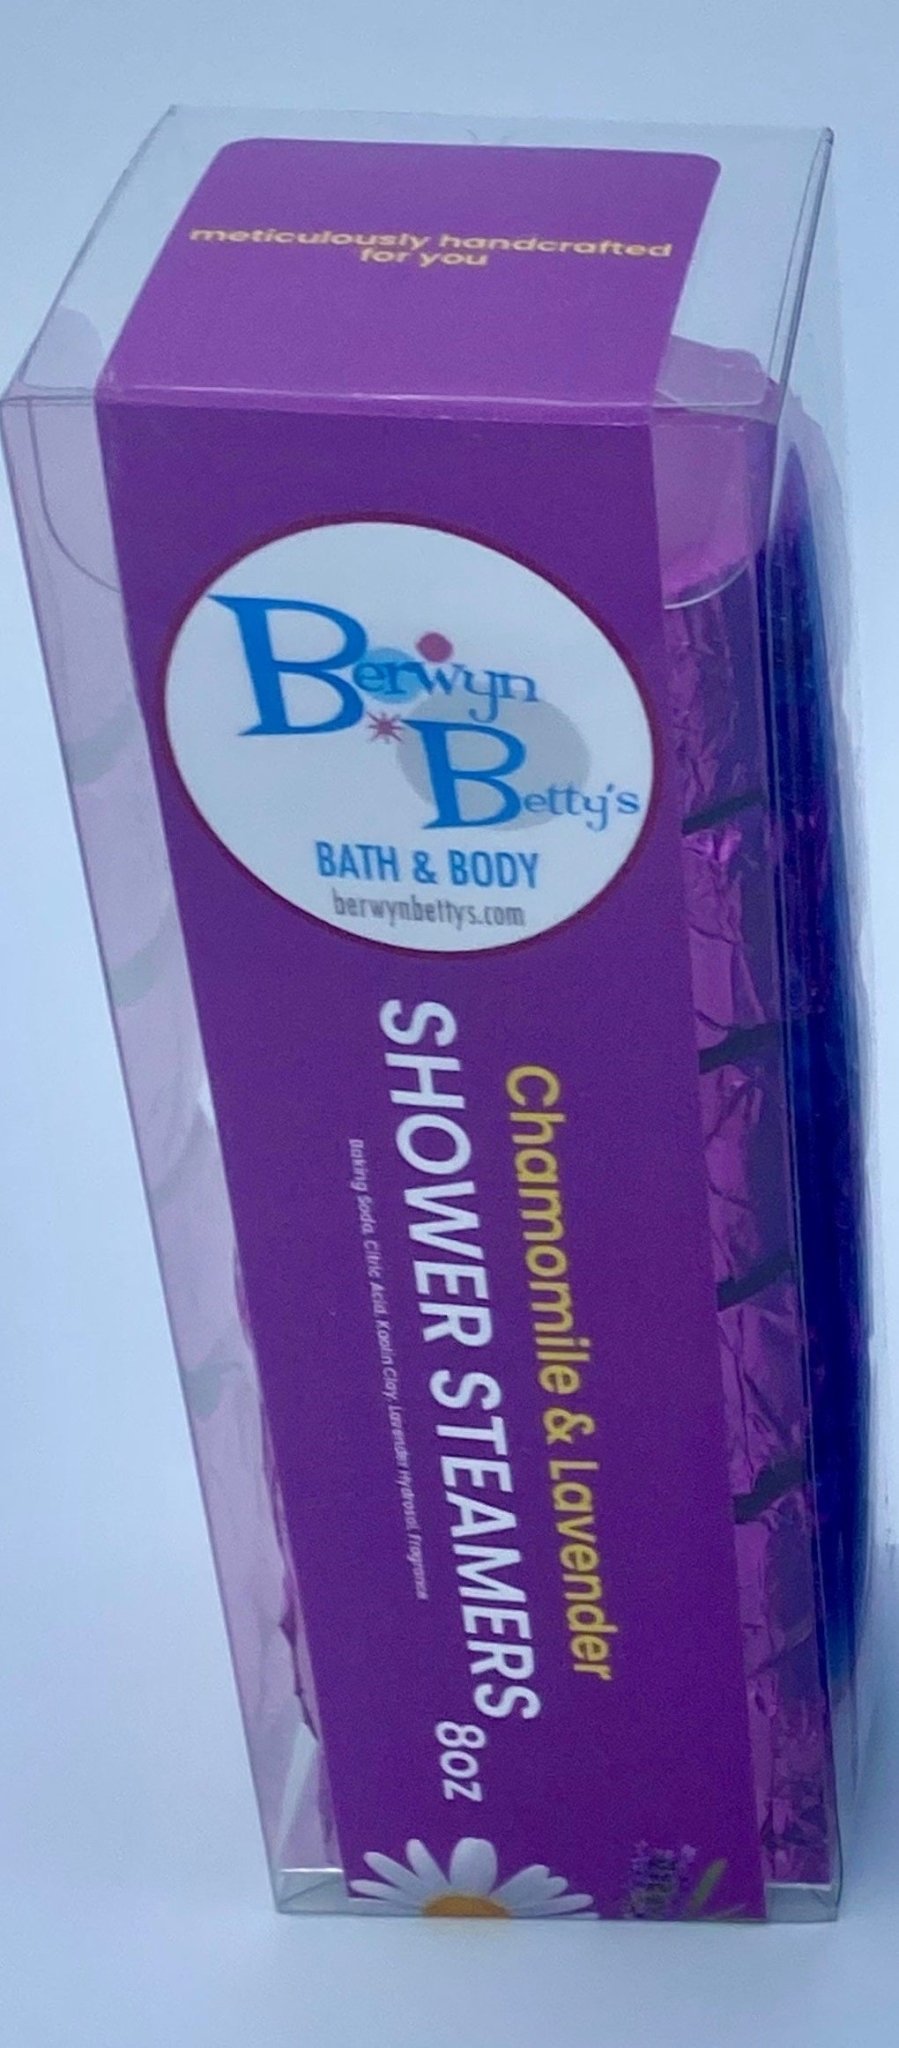 Chamomile & Lavender Shower Steamers - 6 ct - Berwyn Betty's Bath & Body Shop